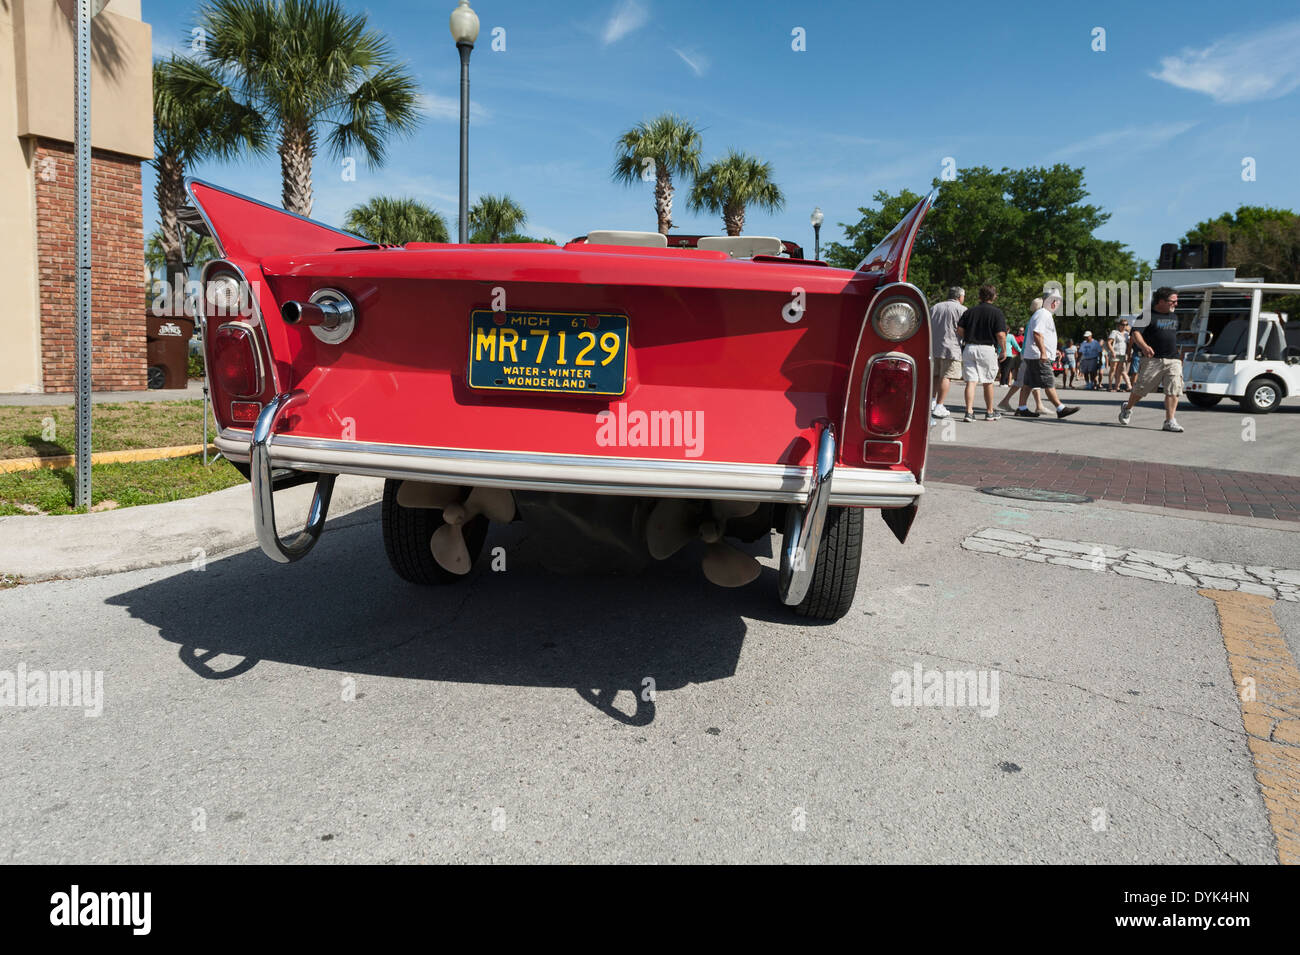 Antique Car Boat Show In Florida - Antique Poster